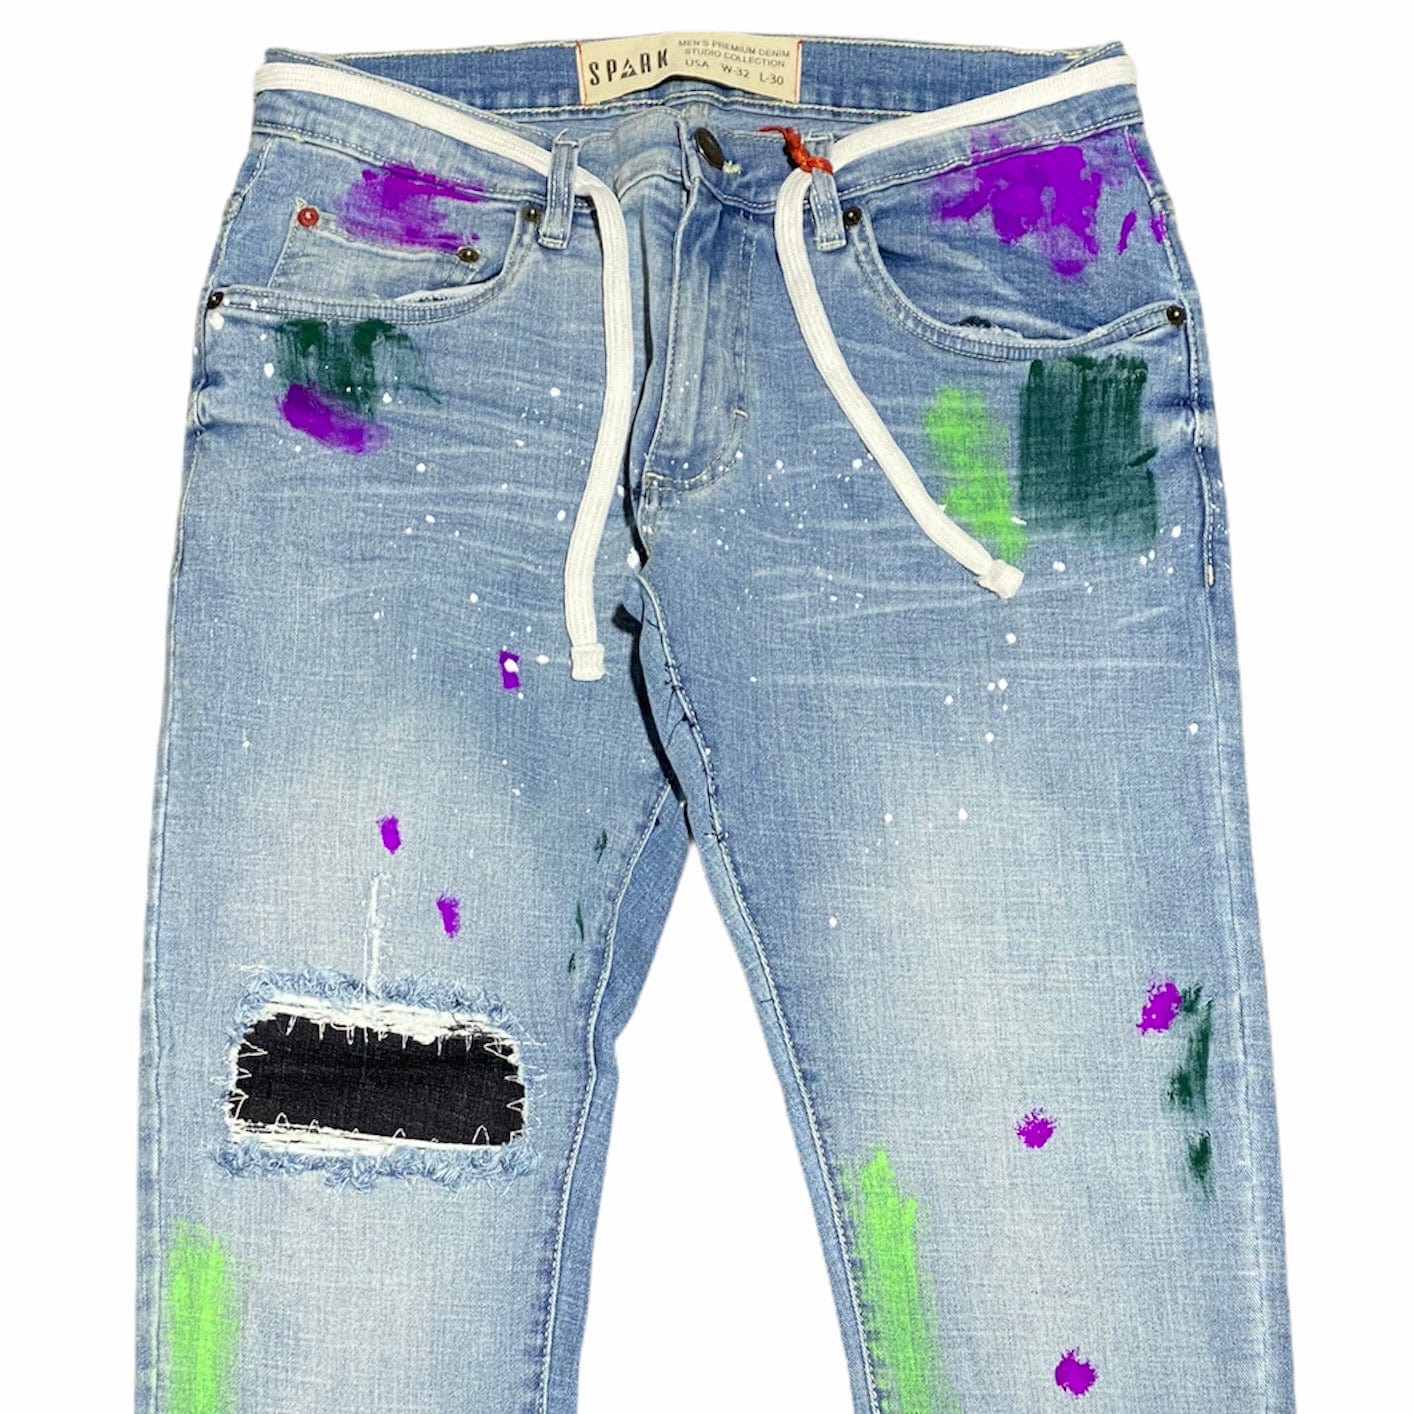 Spark Paint Splattered Denim Jeans (Light Blue) S11200 – City Man USA